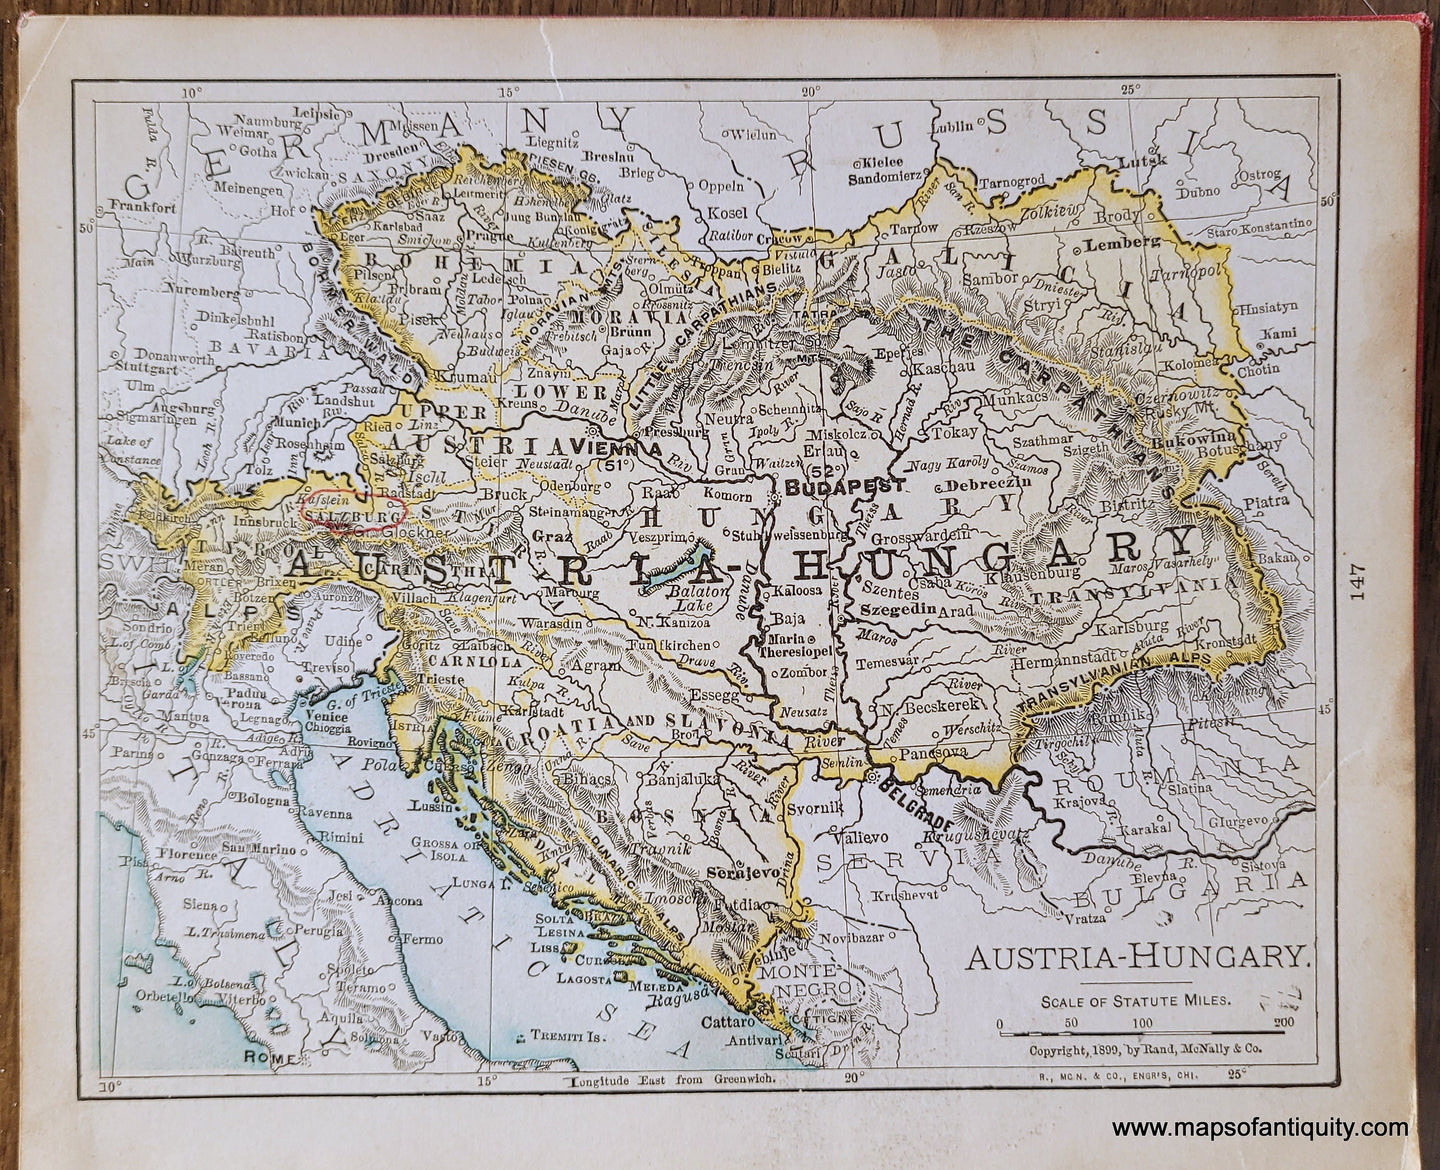 Genuine-Antique-Map-Austria-Hungary-1900-Rand-McNally-Maps-Of-Antiquity